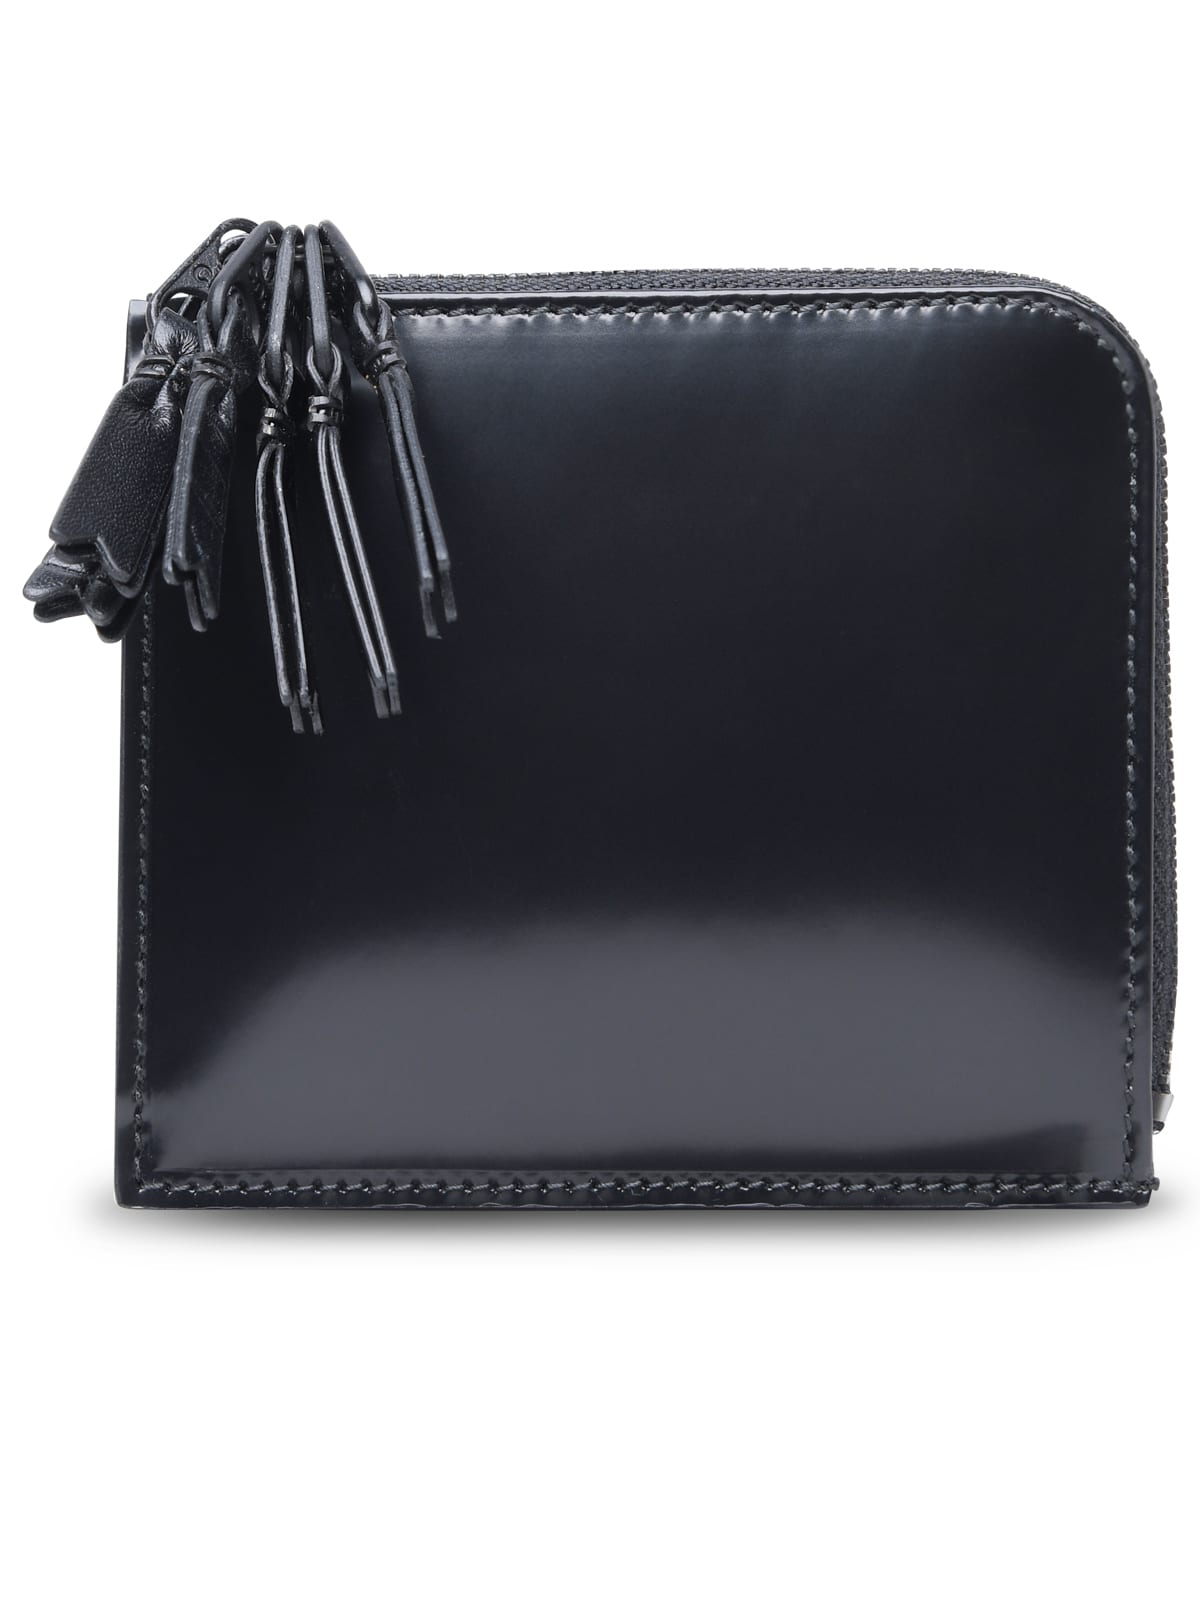 Comme Des Garçons Medley Black Leather Wallet